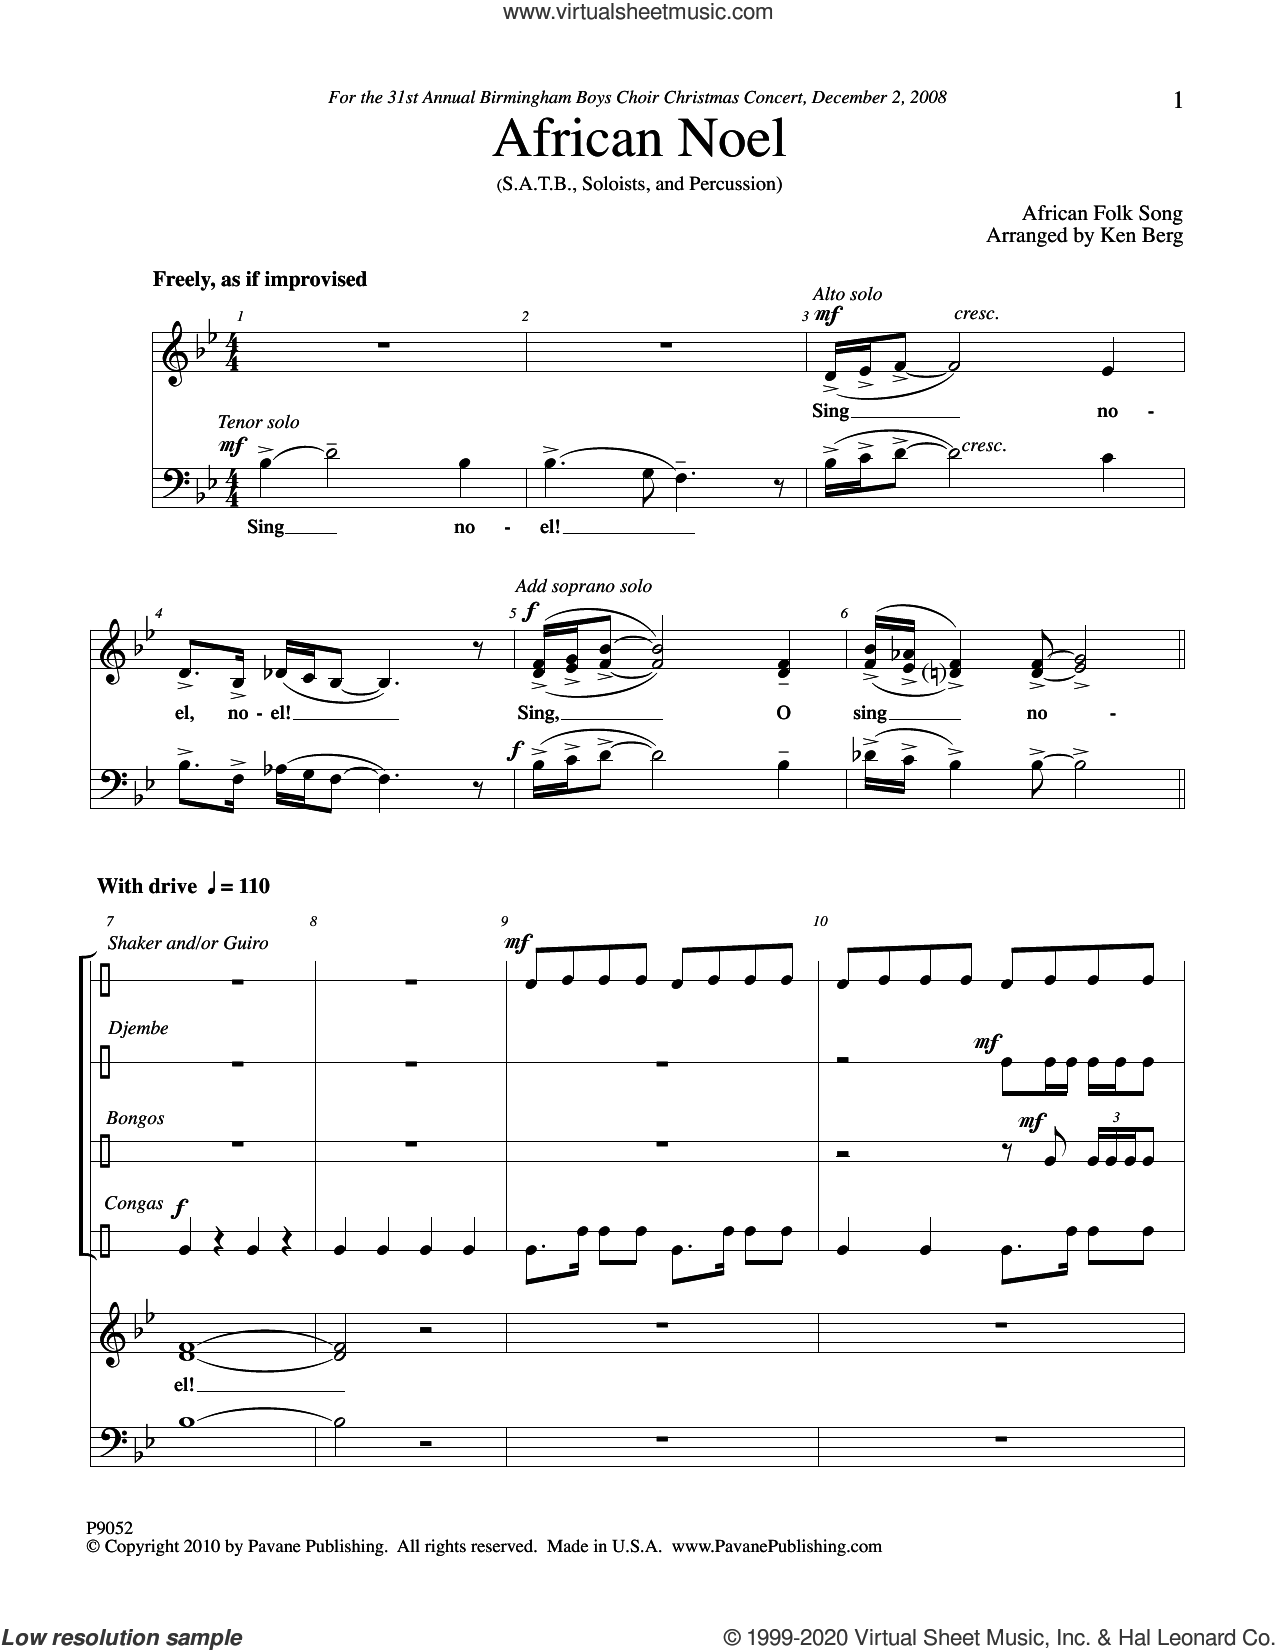 Chant de Noël: 1st Percussion: 1st Percussion Part - Digital Sheet Music  Download